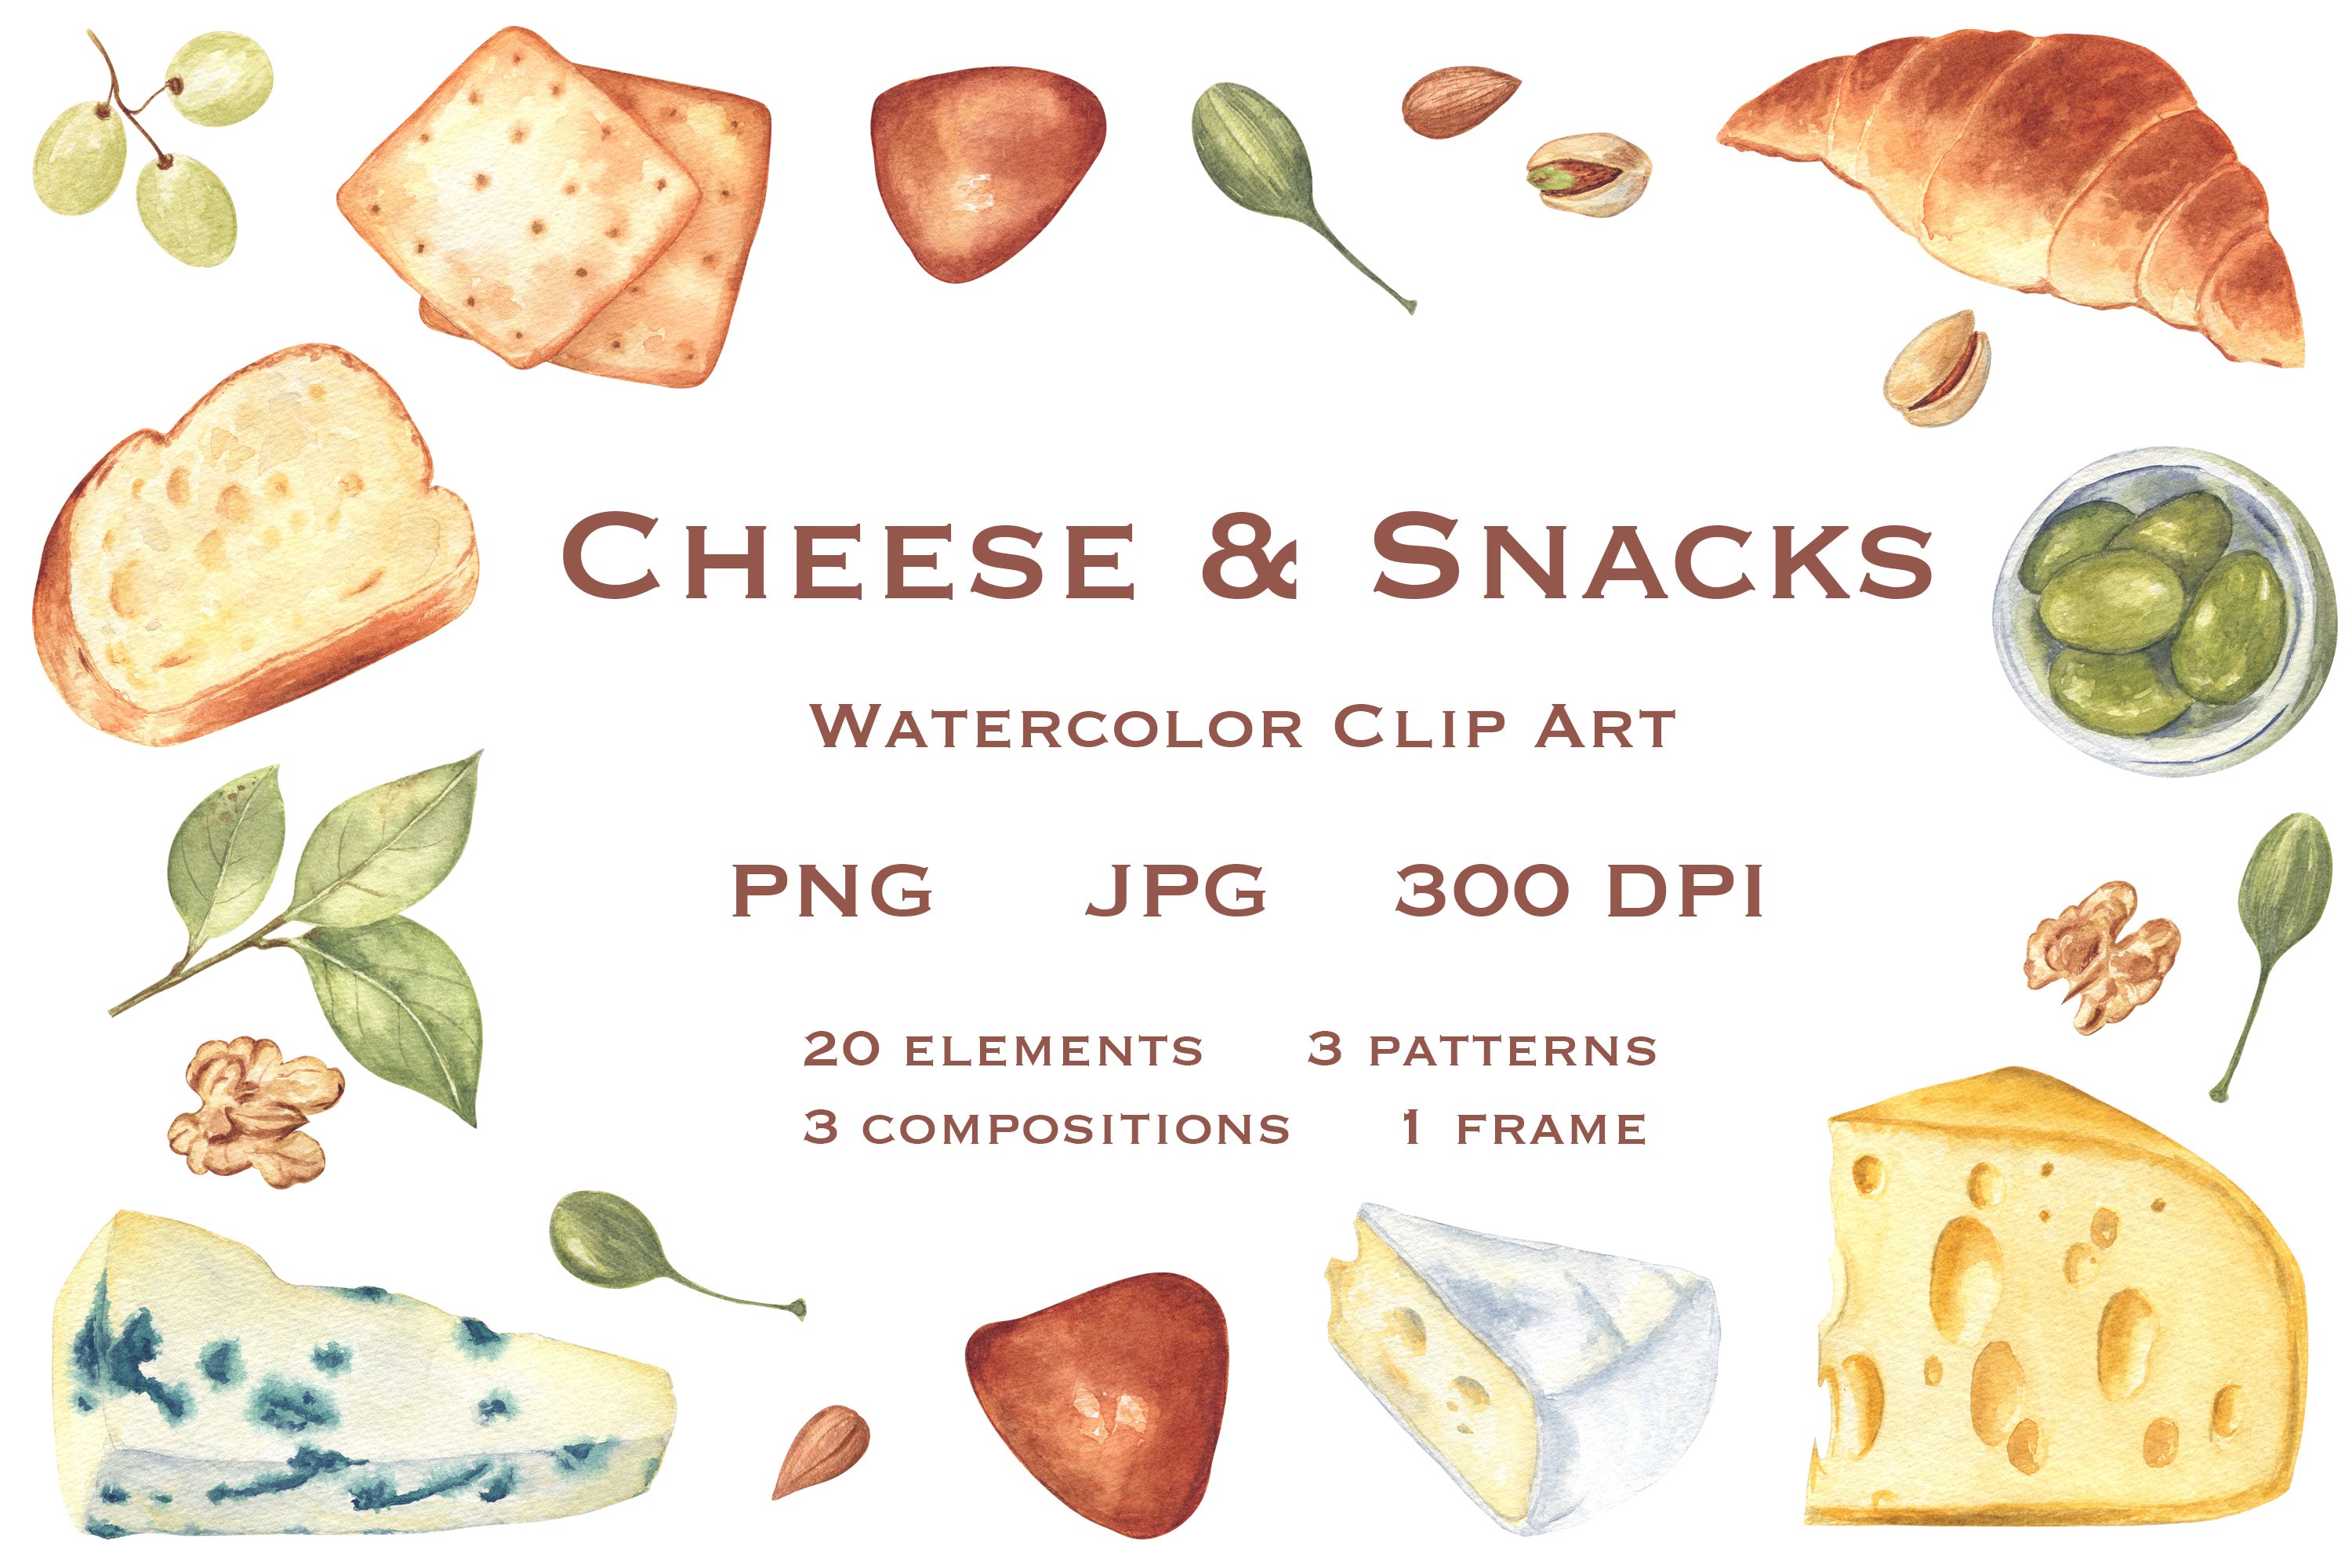 Wonderful hand drawn image of hard cheese and snacks.